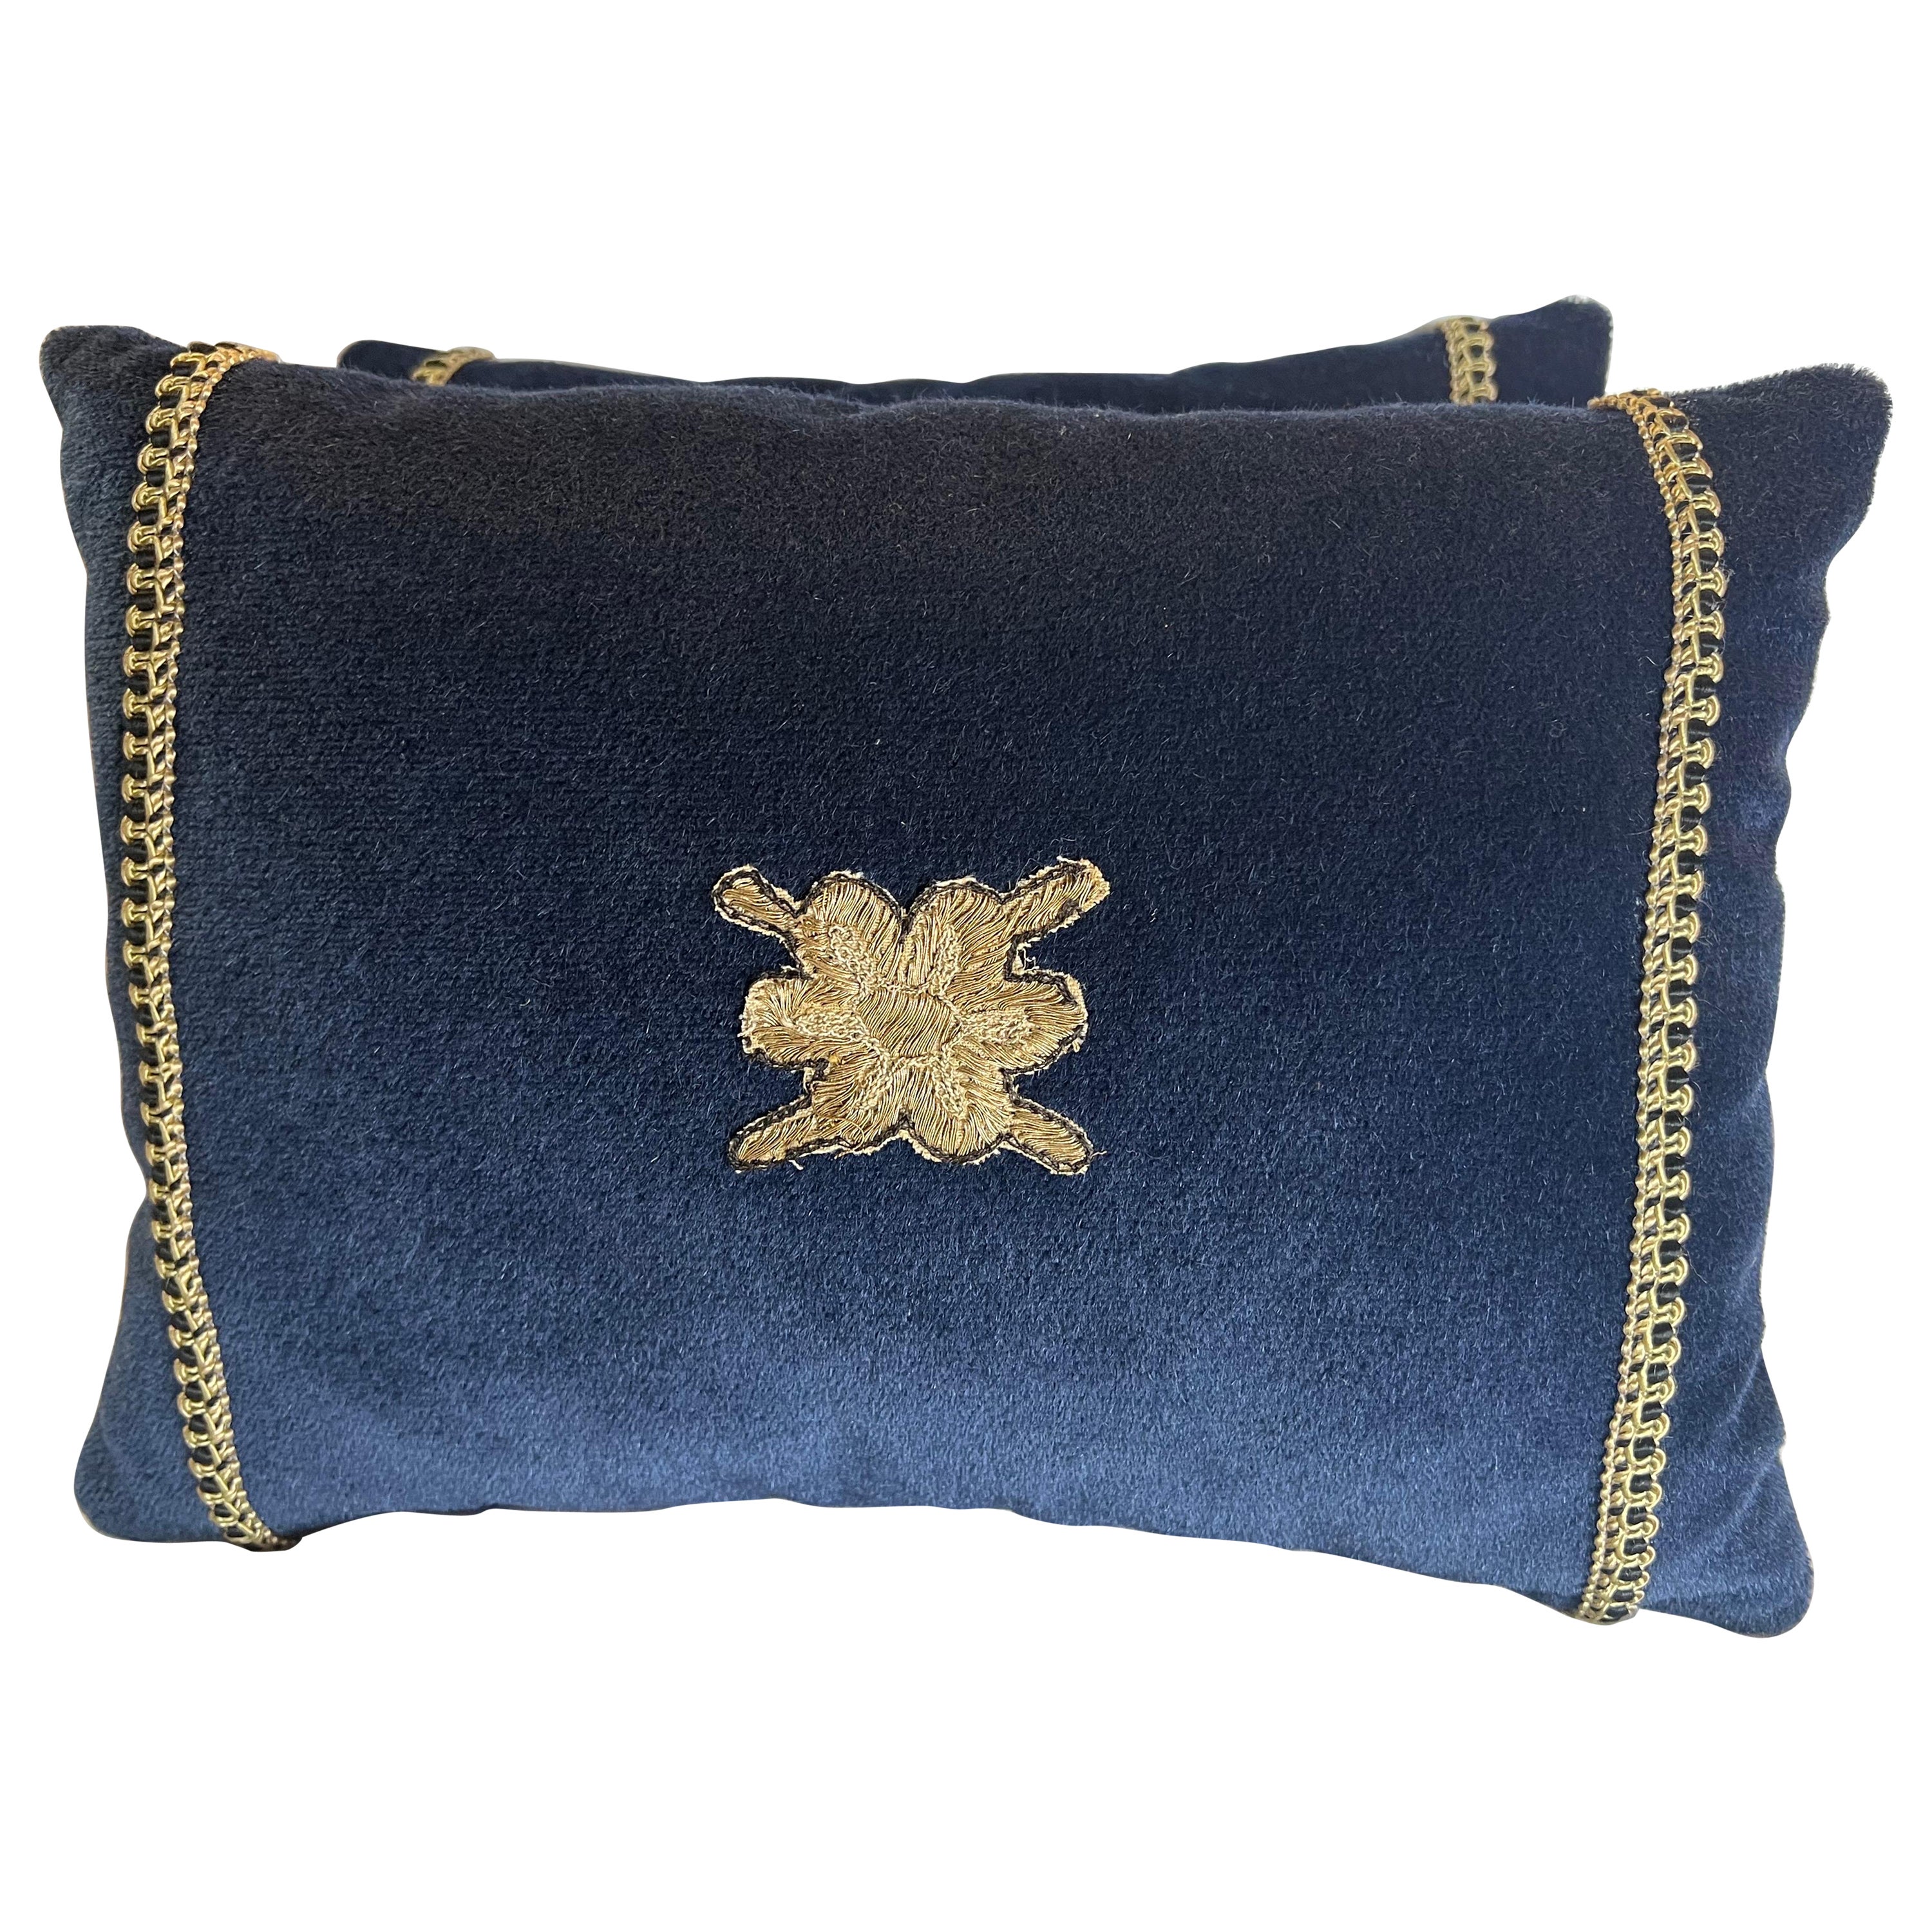 Pair of Blue Velvet Appliqued Pillows by Melissa Levinson